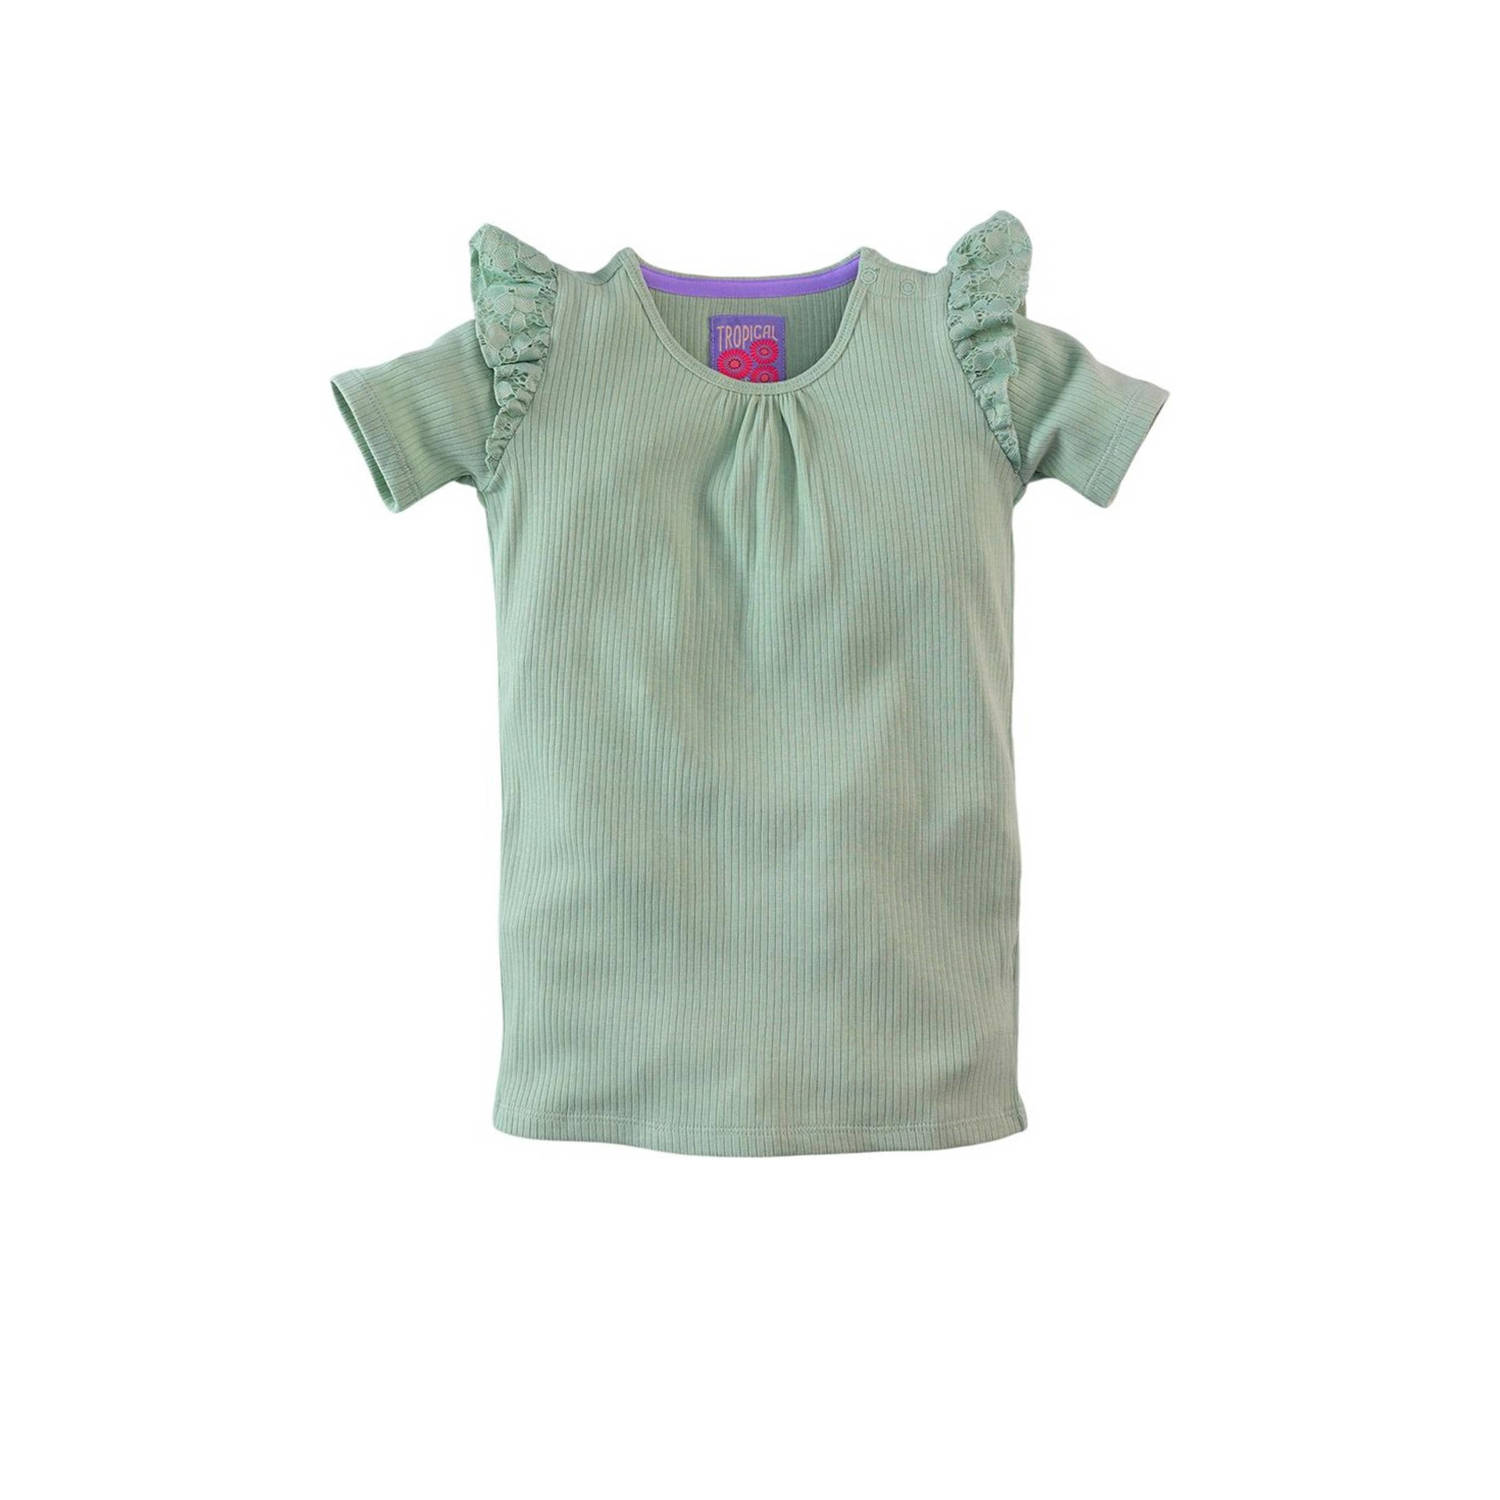 Z8 Meisjes Tops & T-shirts Cherli Mint